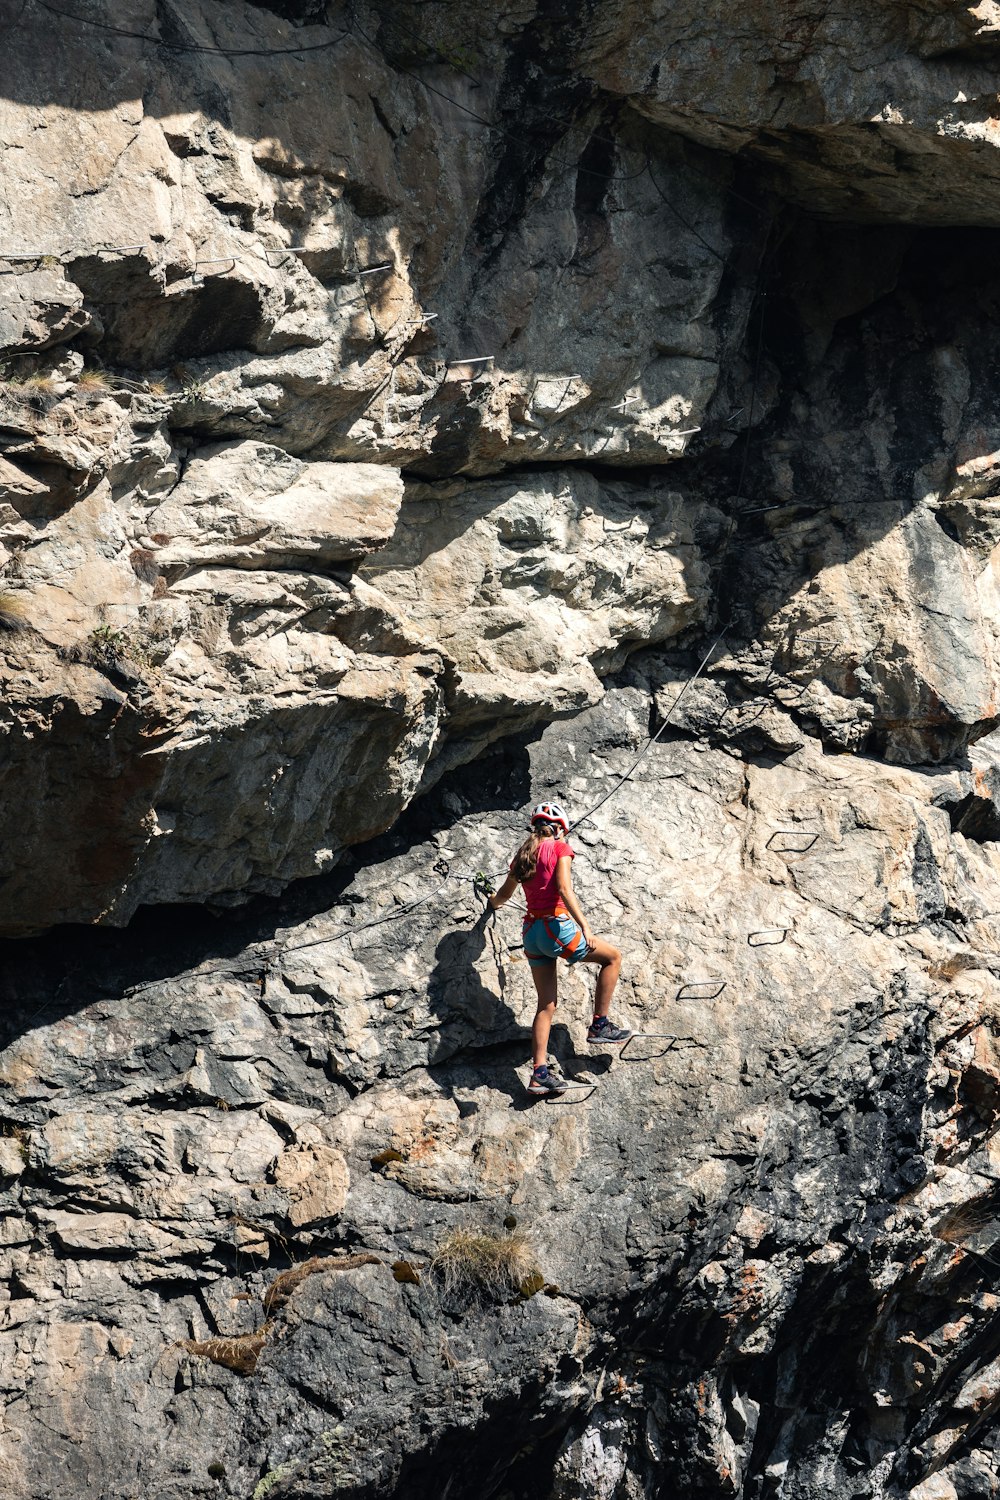 a person climbing up a rocky cliff